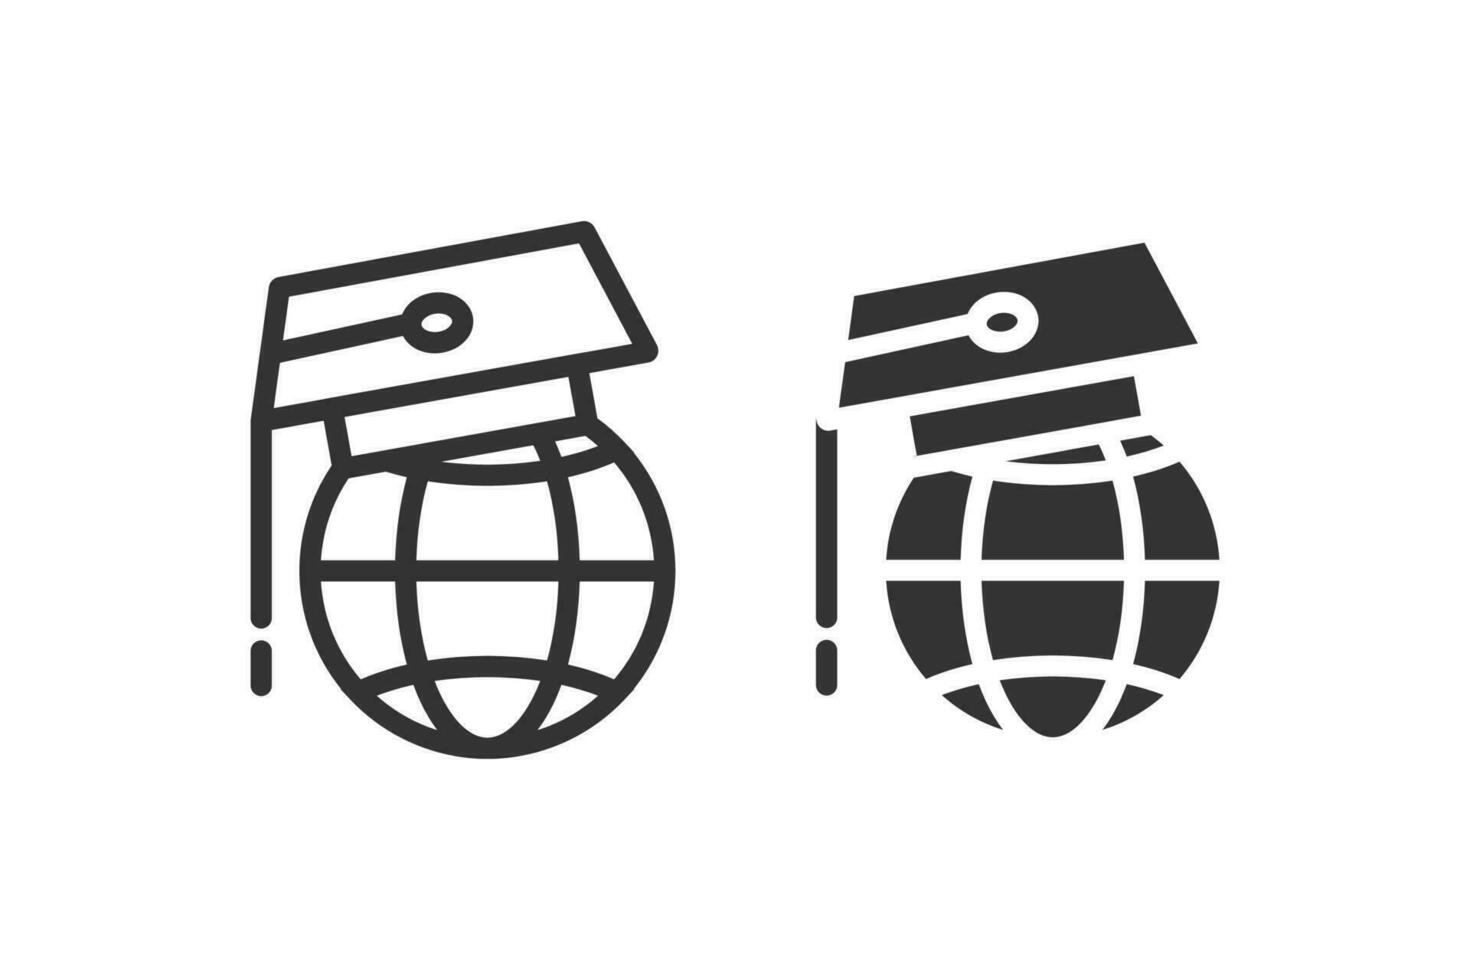 Graduation cap and emblem of planet icon. Vector illustration design.